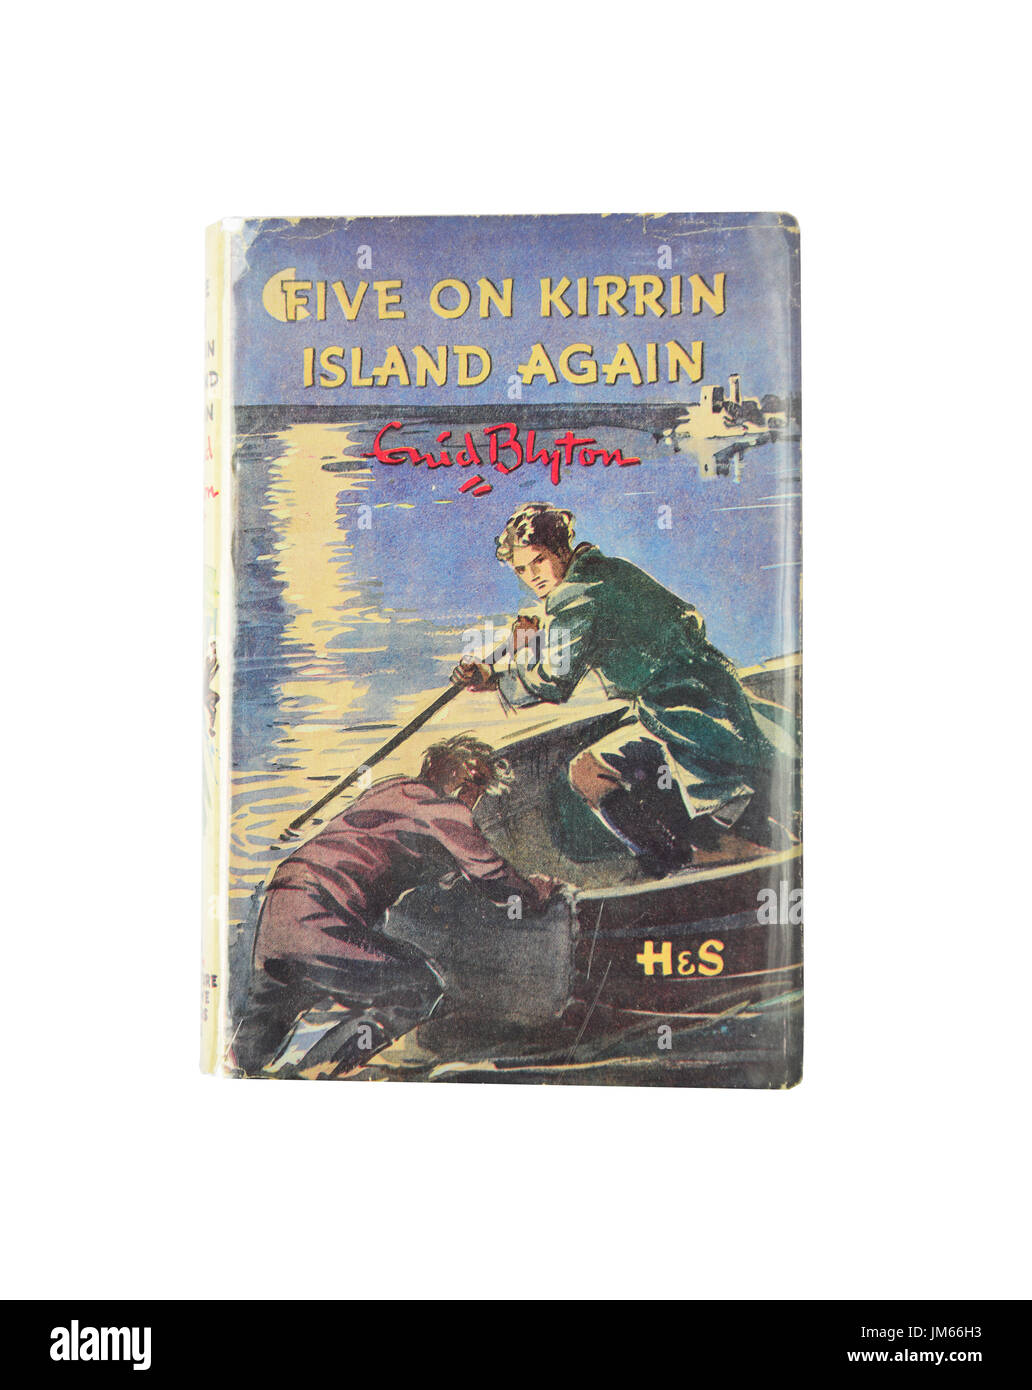 Enid Blyton's 'Five on Kirren Island again' sixth Famous Five book, Surrey, England, United Kingdom Stock Photo